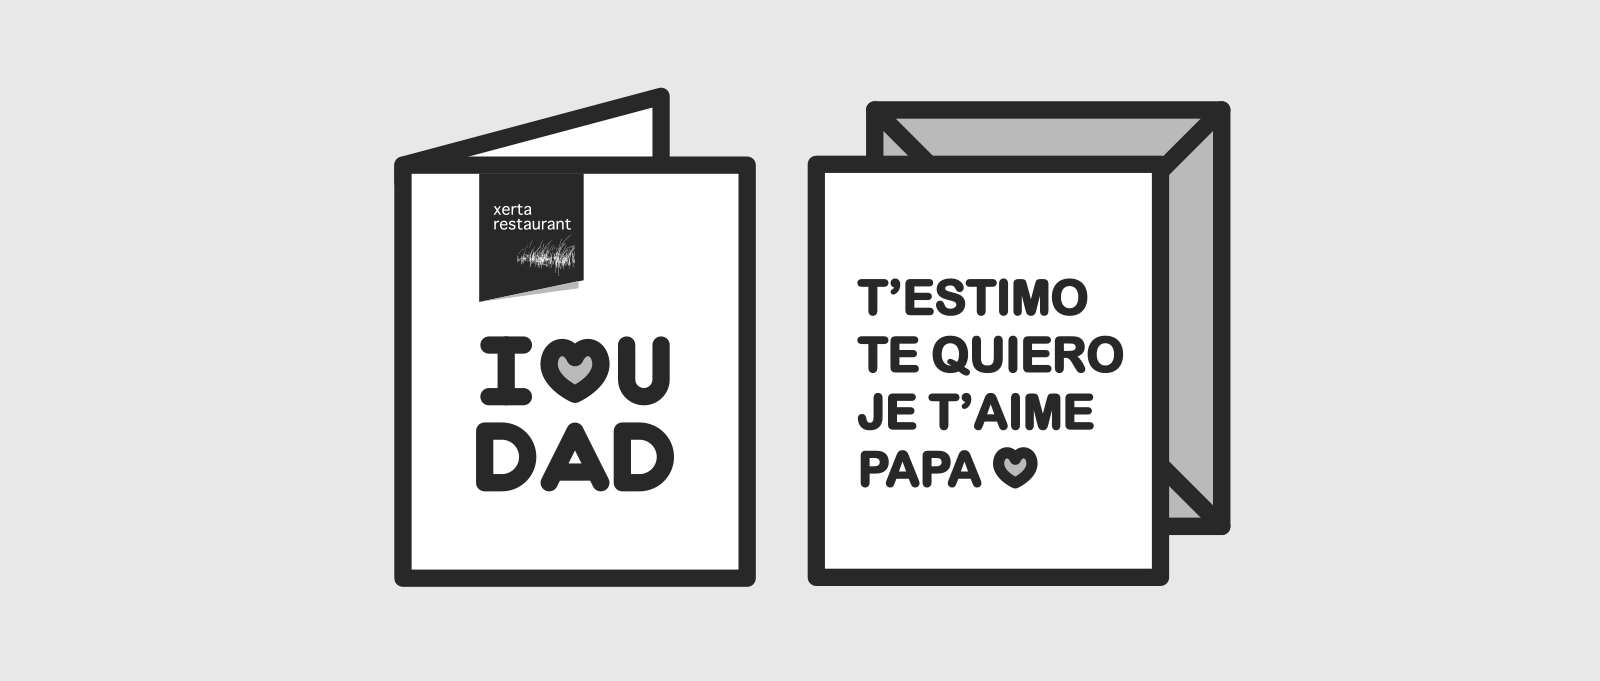 I❤U DAD - Father's Day in Barcelona - Xerta Restaurant